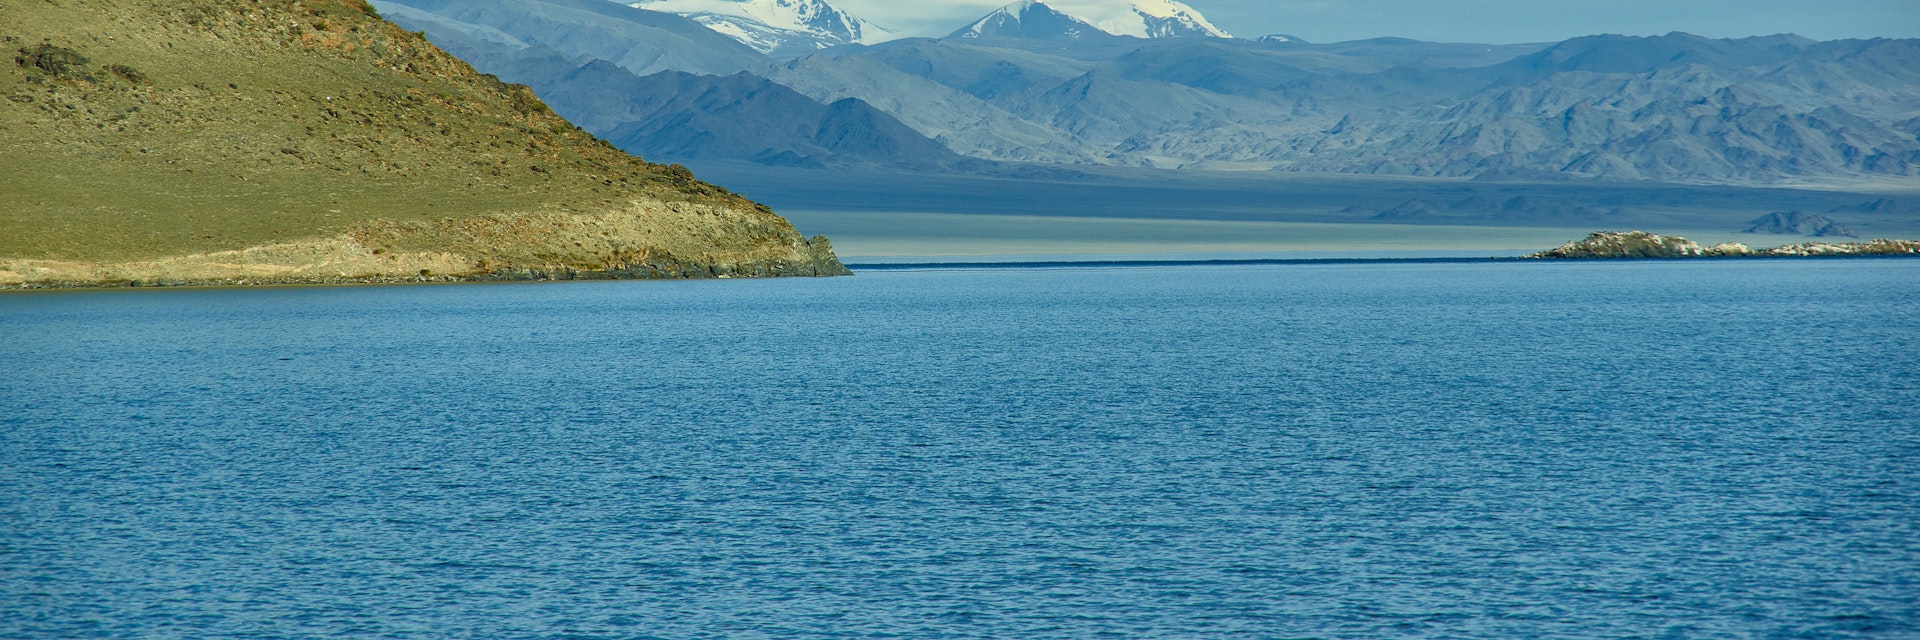 Uureg Nuur Lake, saline lake in an endorheic basin in western Mongolia.